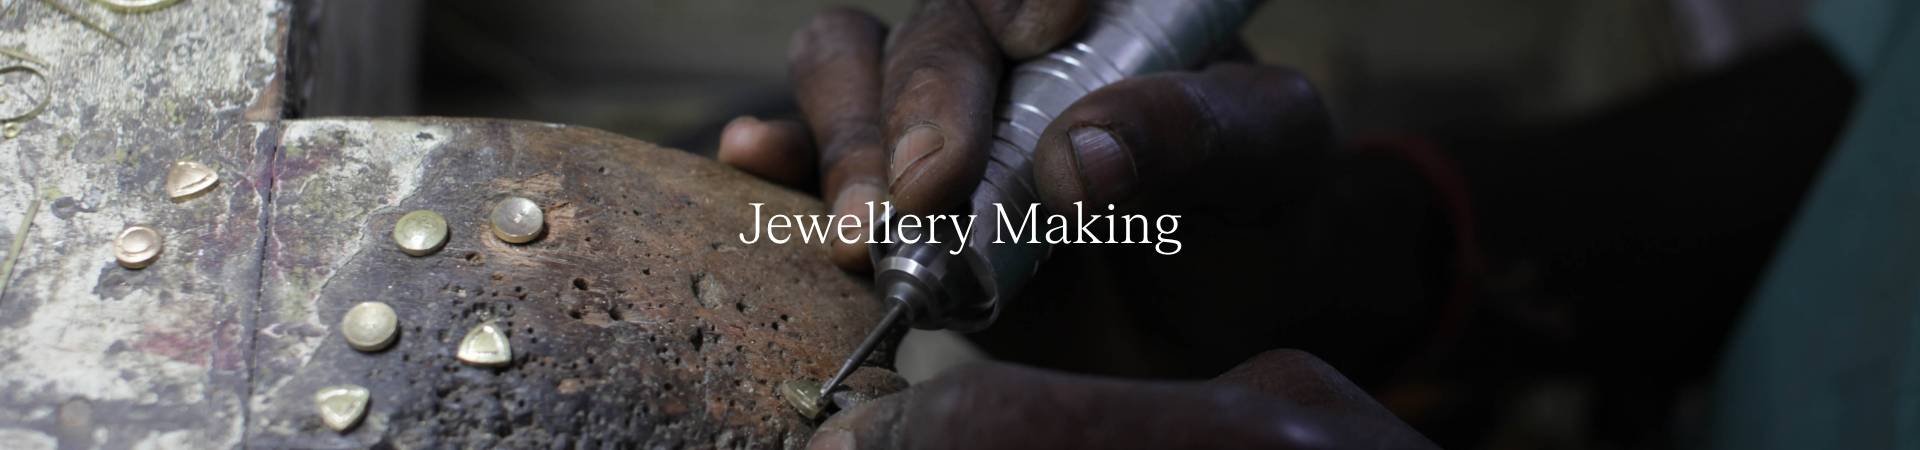 Jewellery Making.jpg